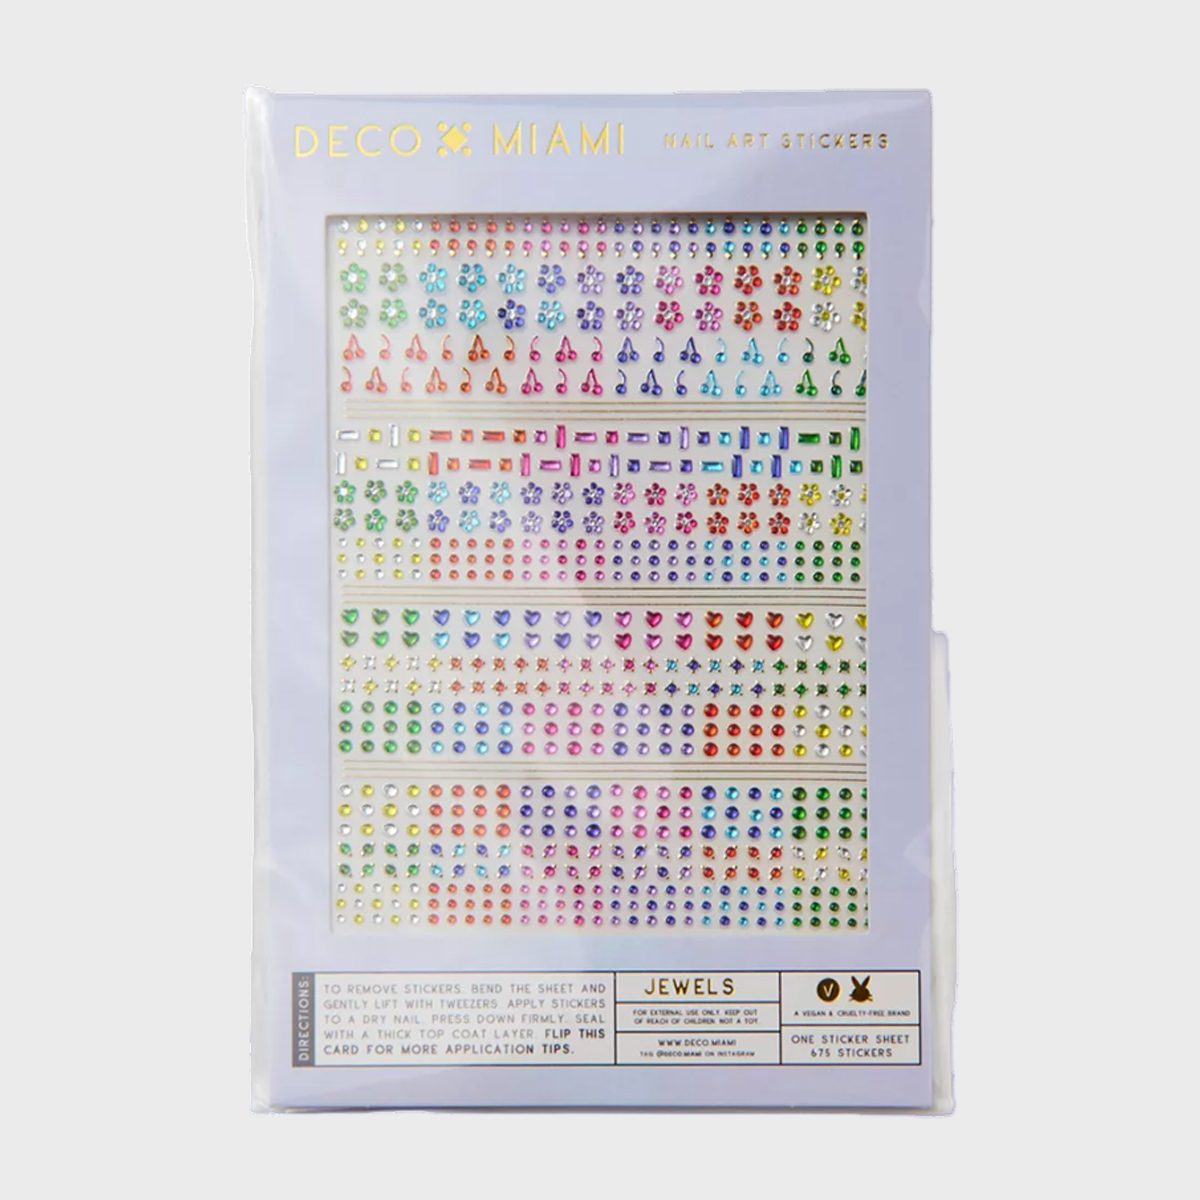 Deco Miami Nail Art Sticker Sheet